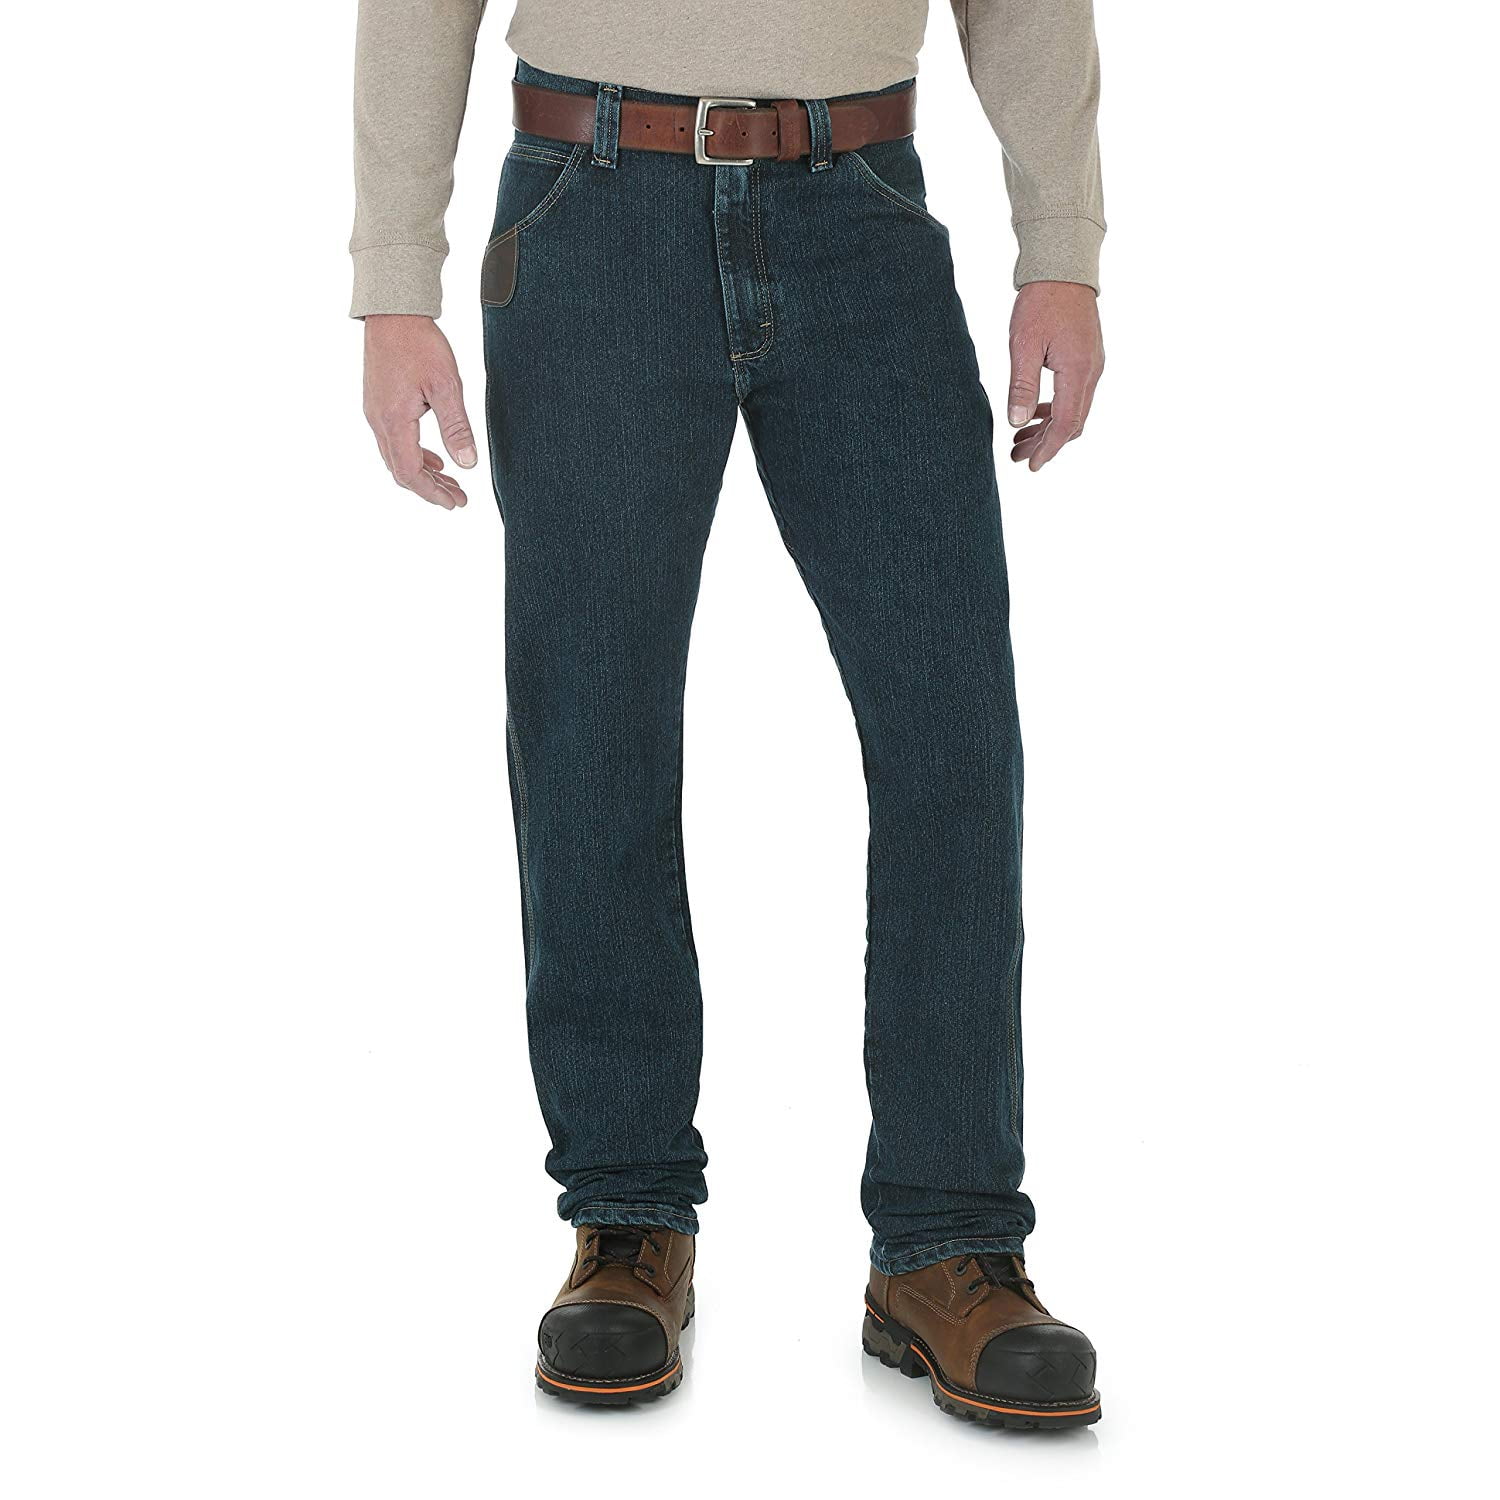 Wrangler Men's Five Pocket Jean, Dark Tint, 36x30 | Walmart Canada